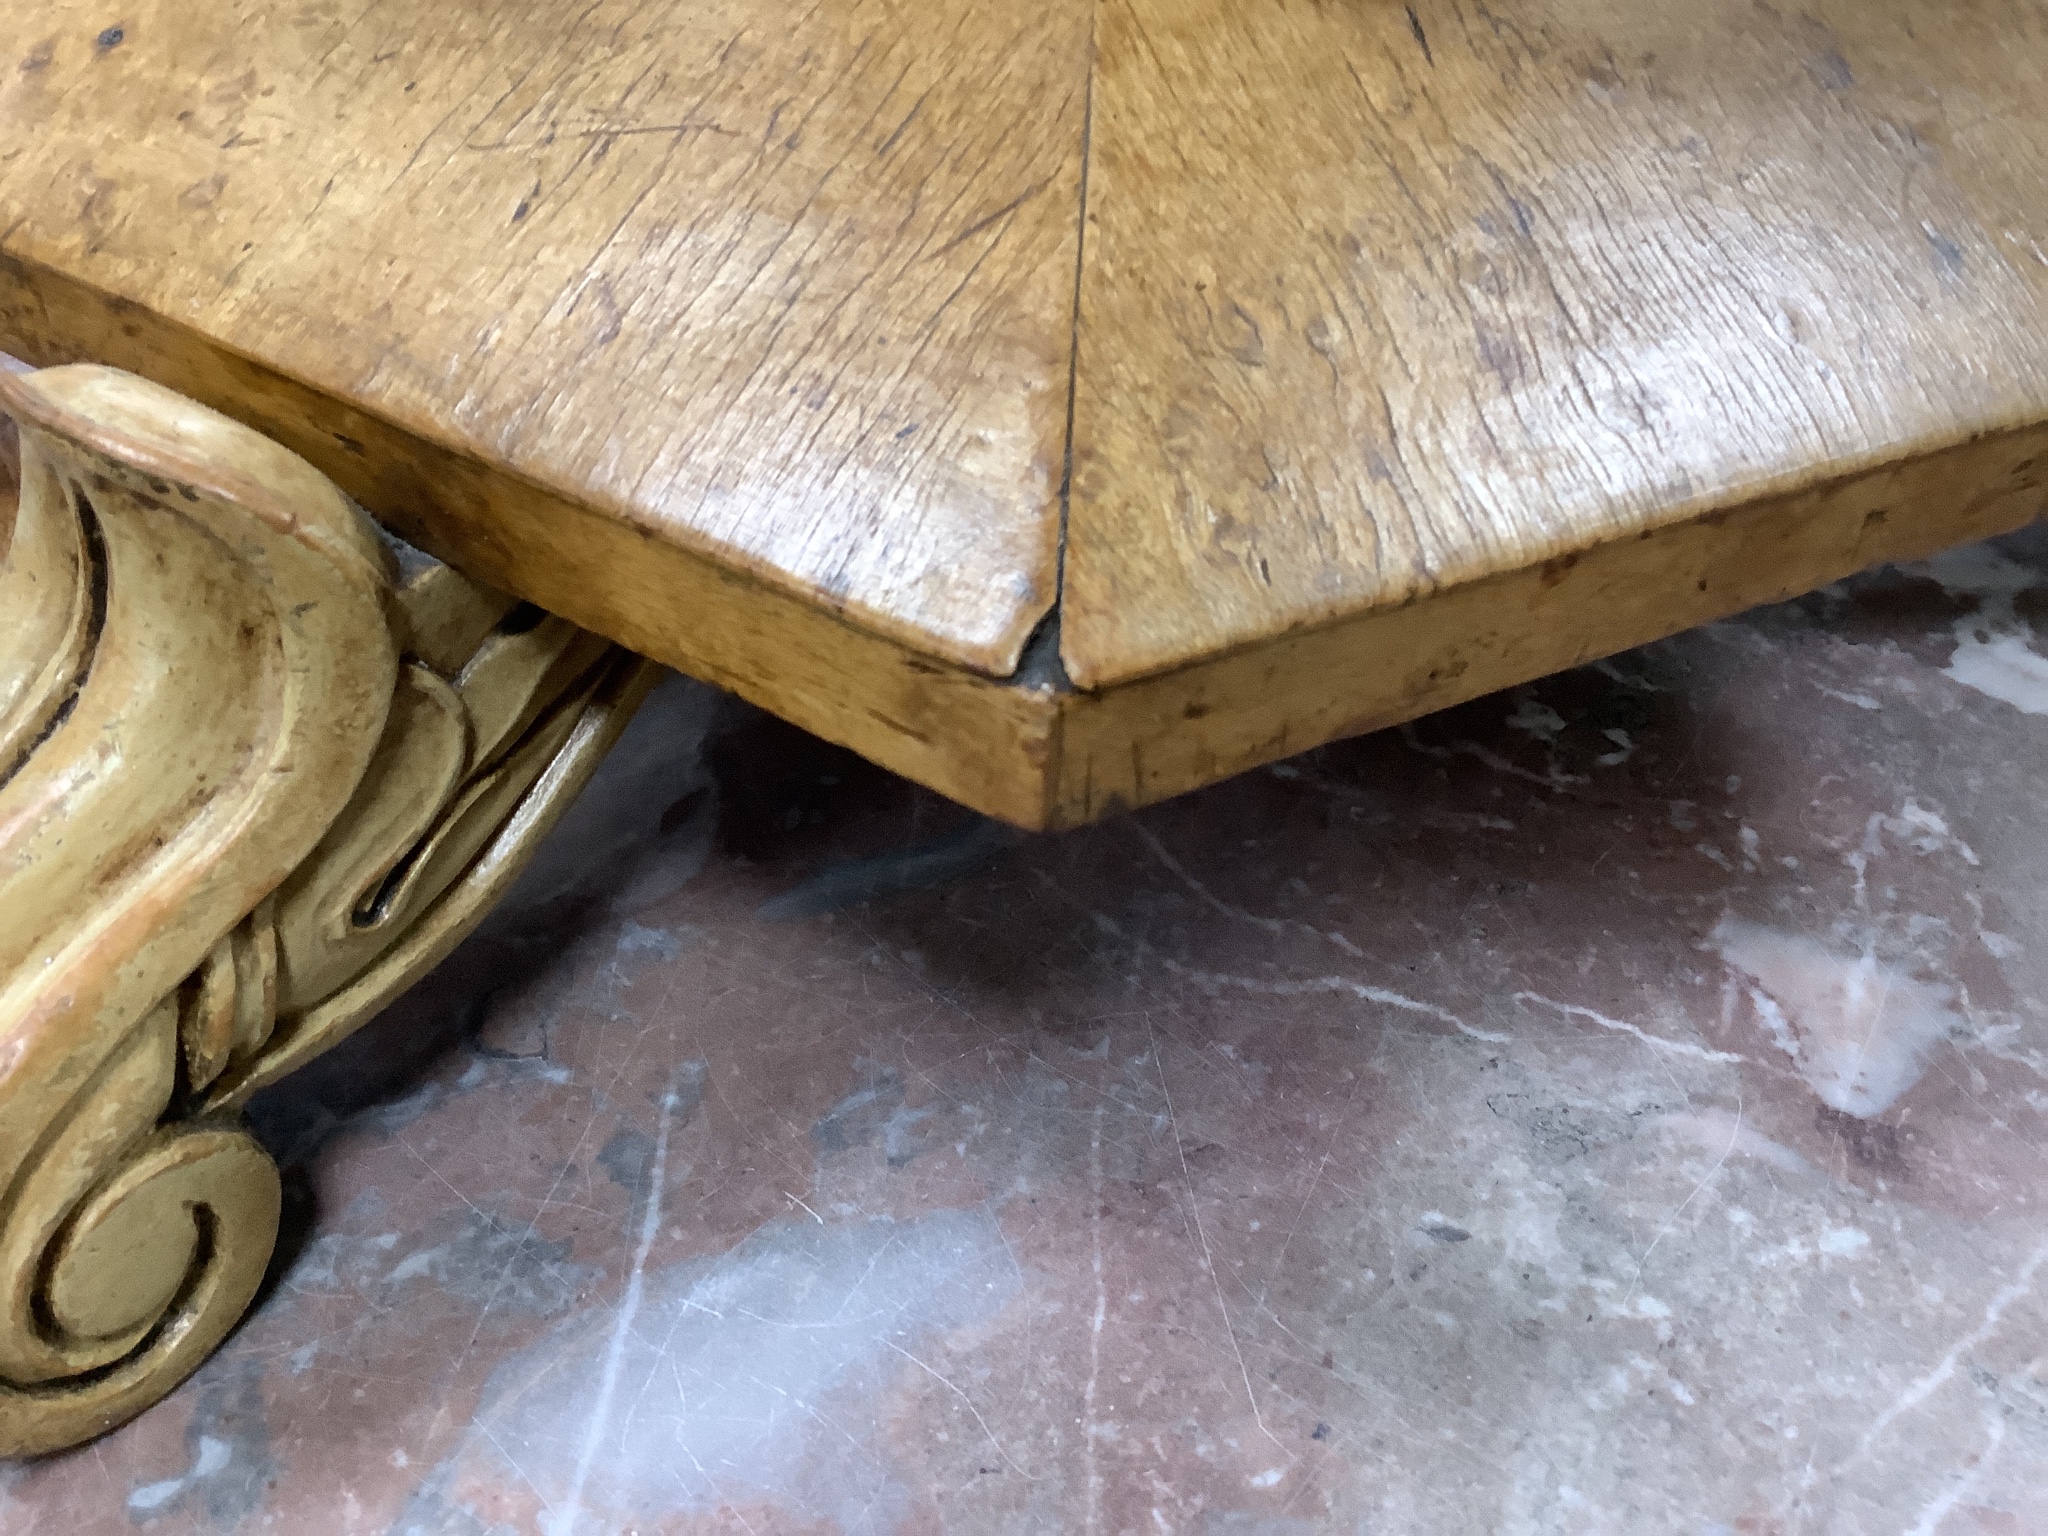 A 19th century bird's eye maple cane seated dressing stool